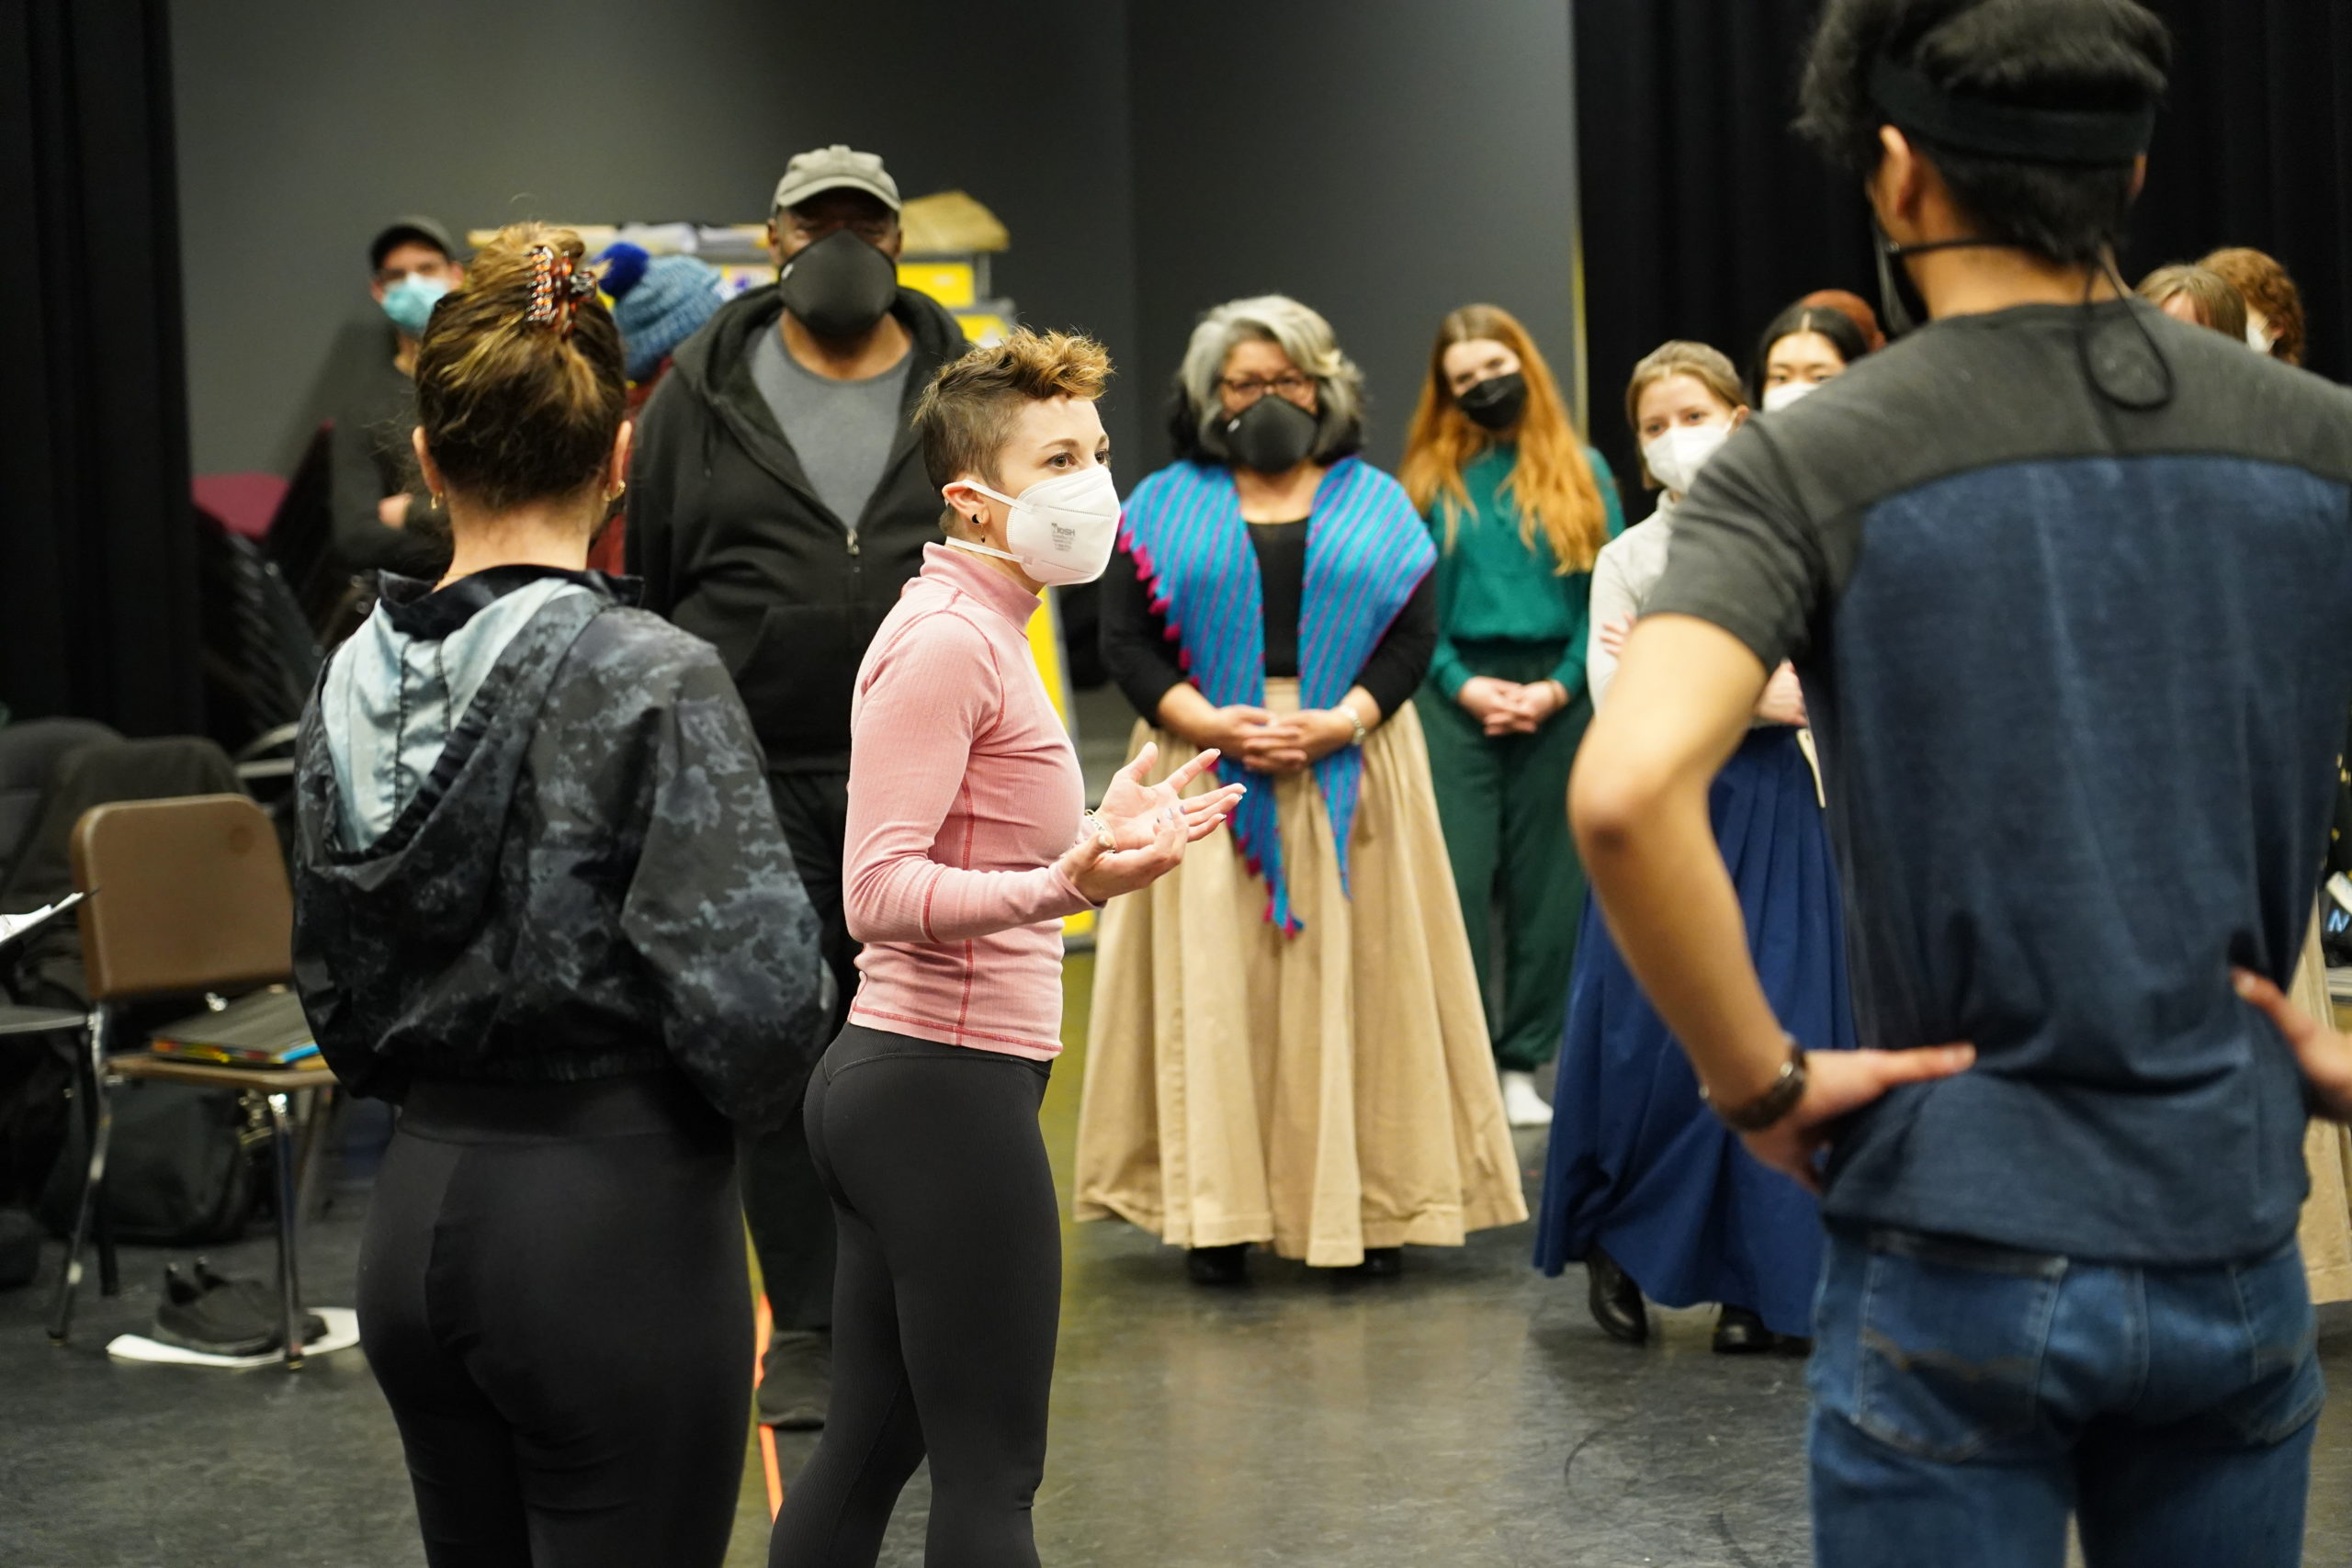 Choreographer Alison Solomon addresses Fiddler dancers; Chuck Cooper (Tevye) and Loretta Ables Sayre (Golde) stand to her left.